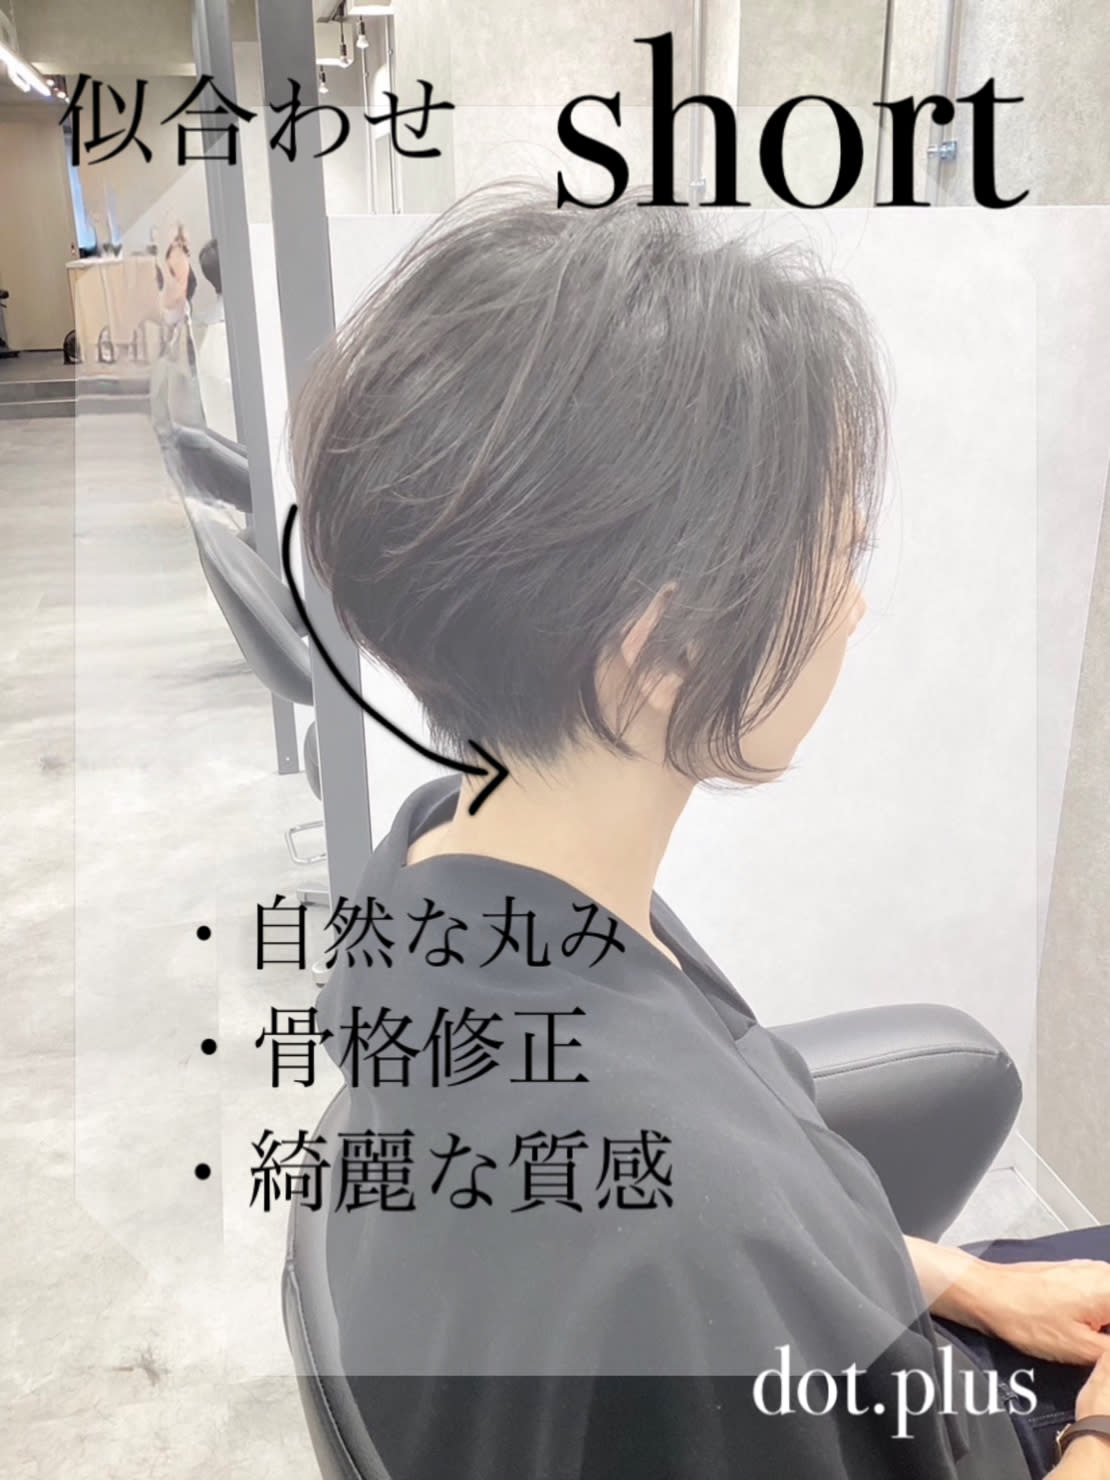 hair salon dot. plus 町田店【ヘアサロンドットプラスマチダテン】のスタイル紹介。【大和聡】似合わせshort